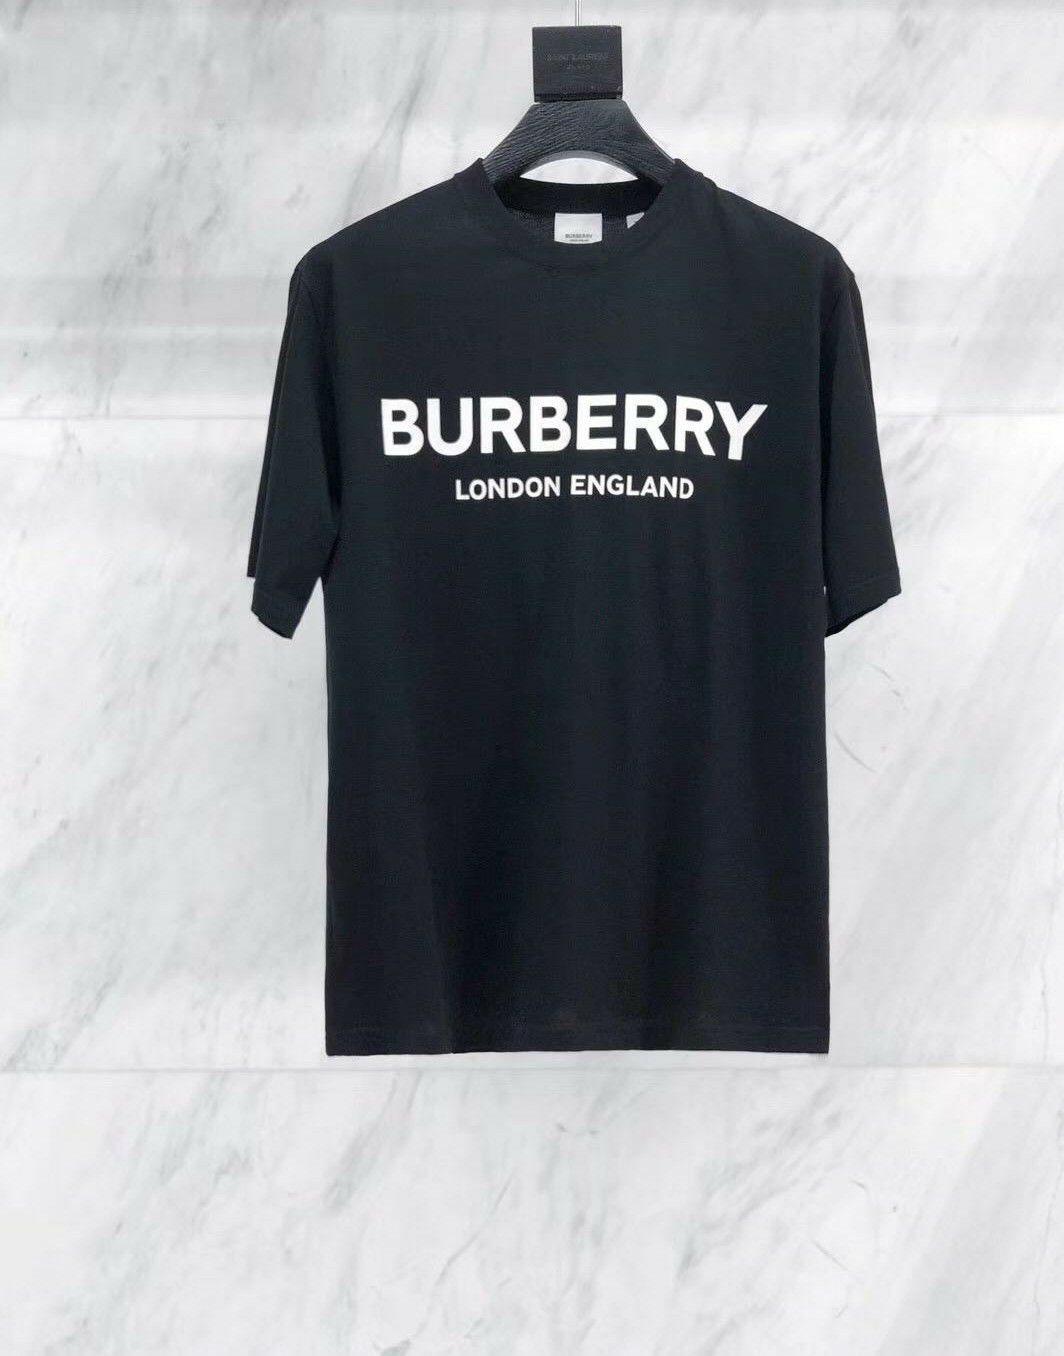 Large Black Burberry T-Shirt 👕